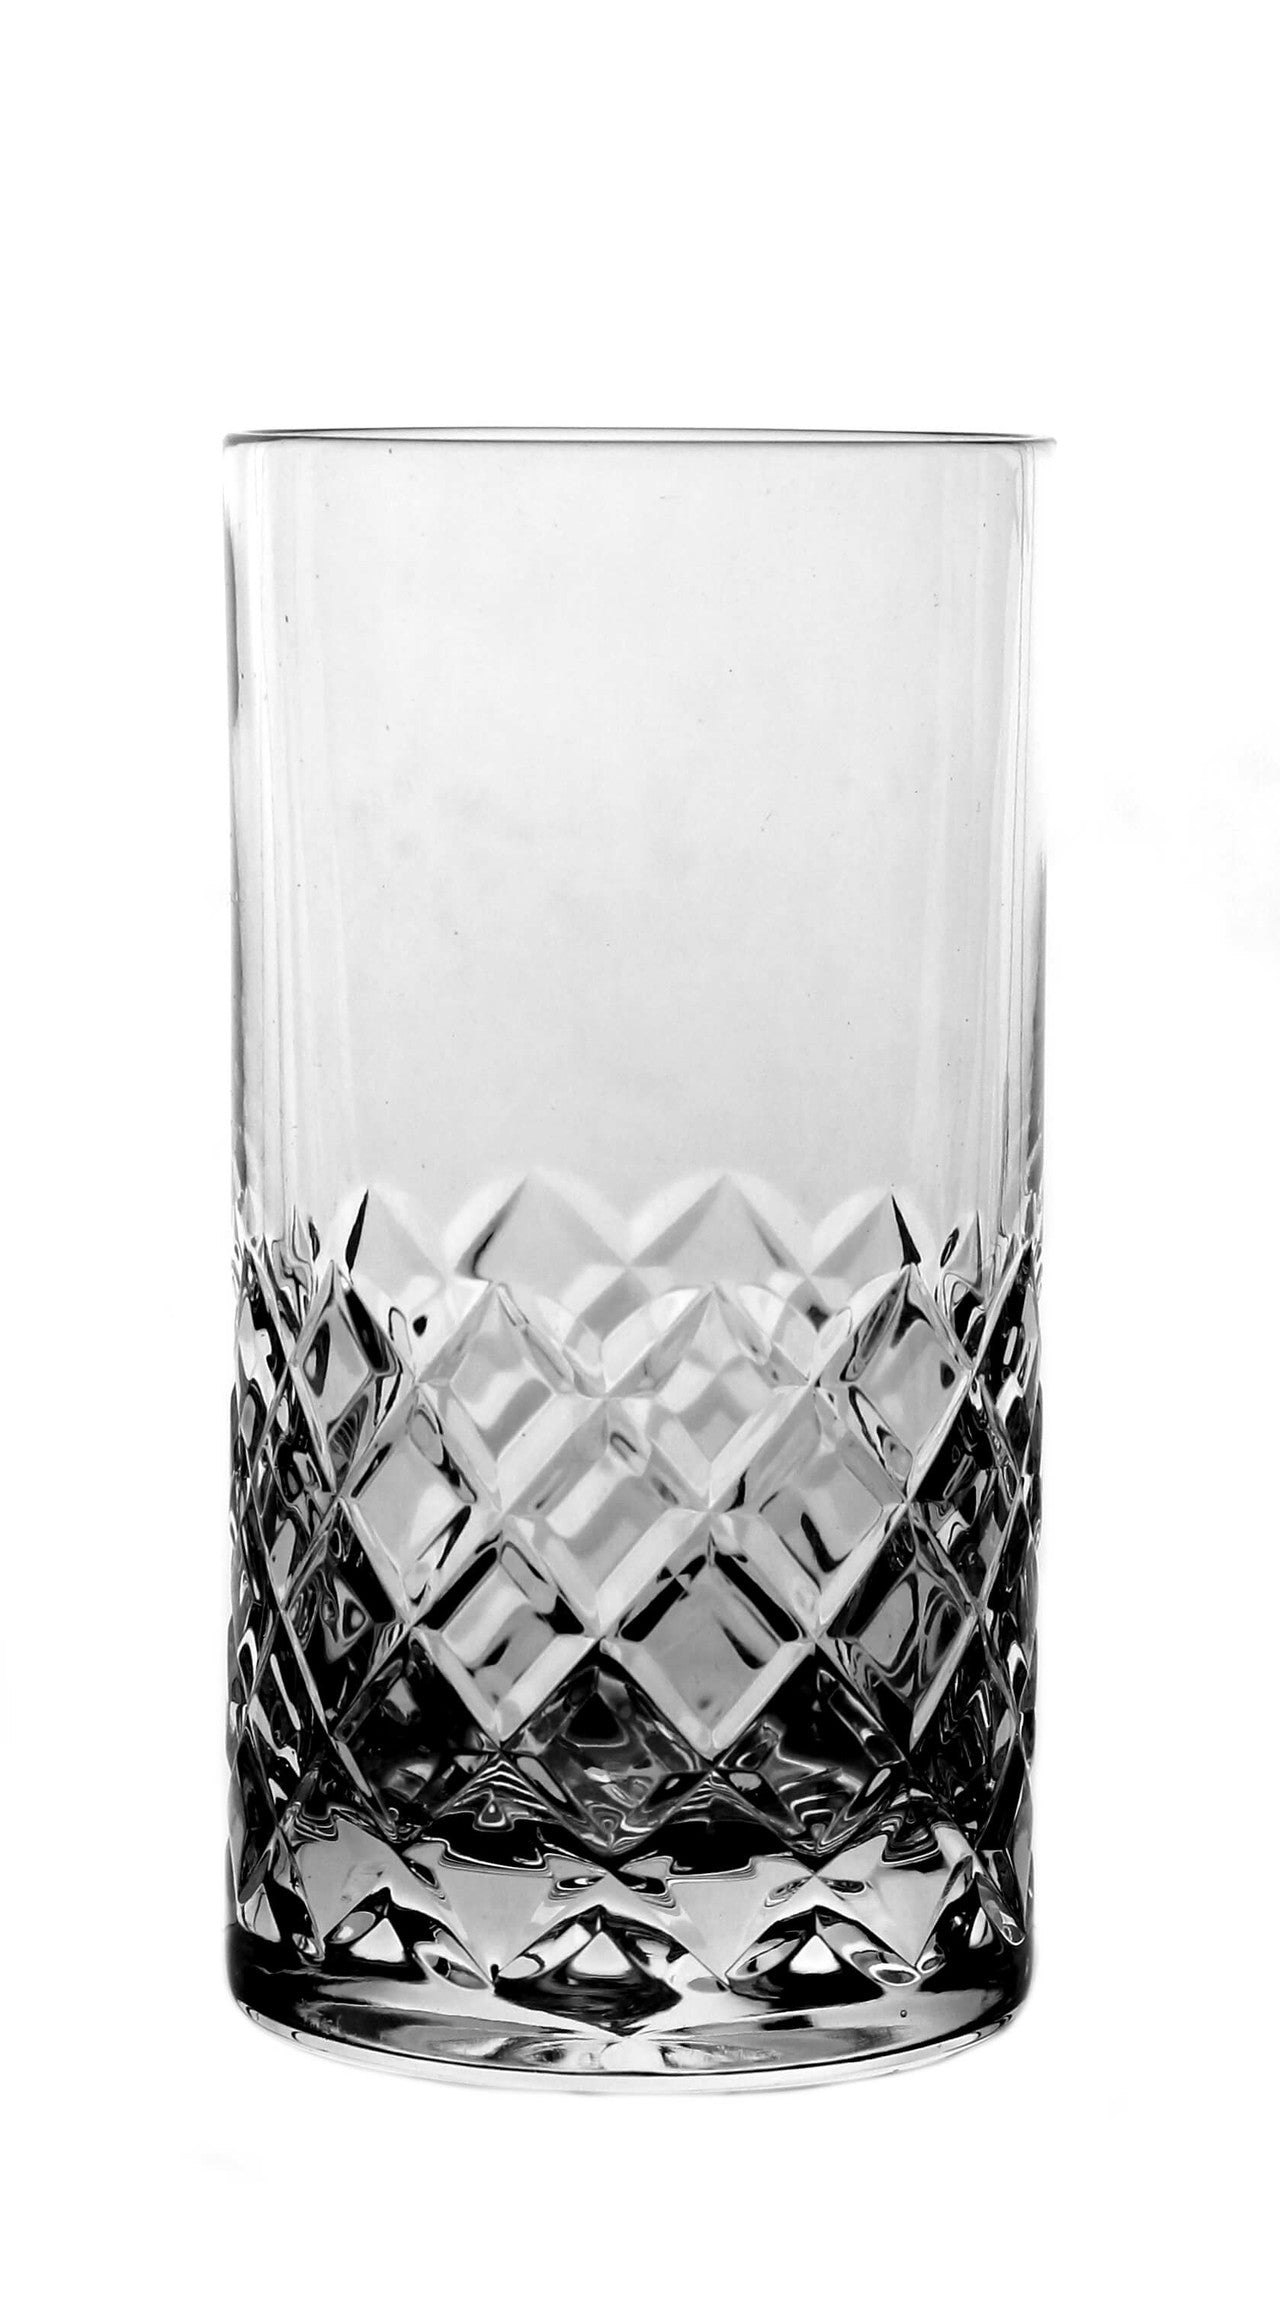 Trinkbecher Karo 300 ml Wasserglas Saftglas Bleikristallglas klar